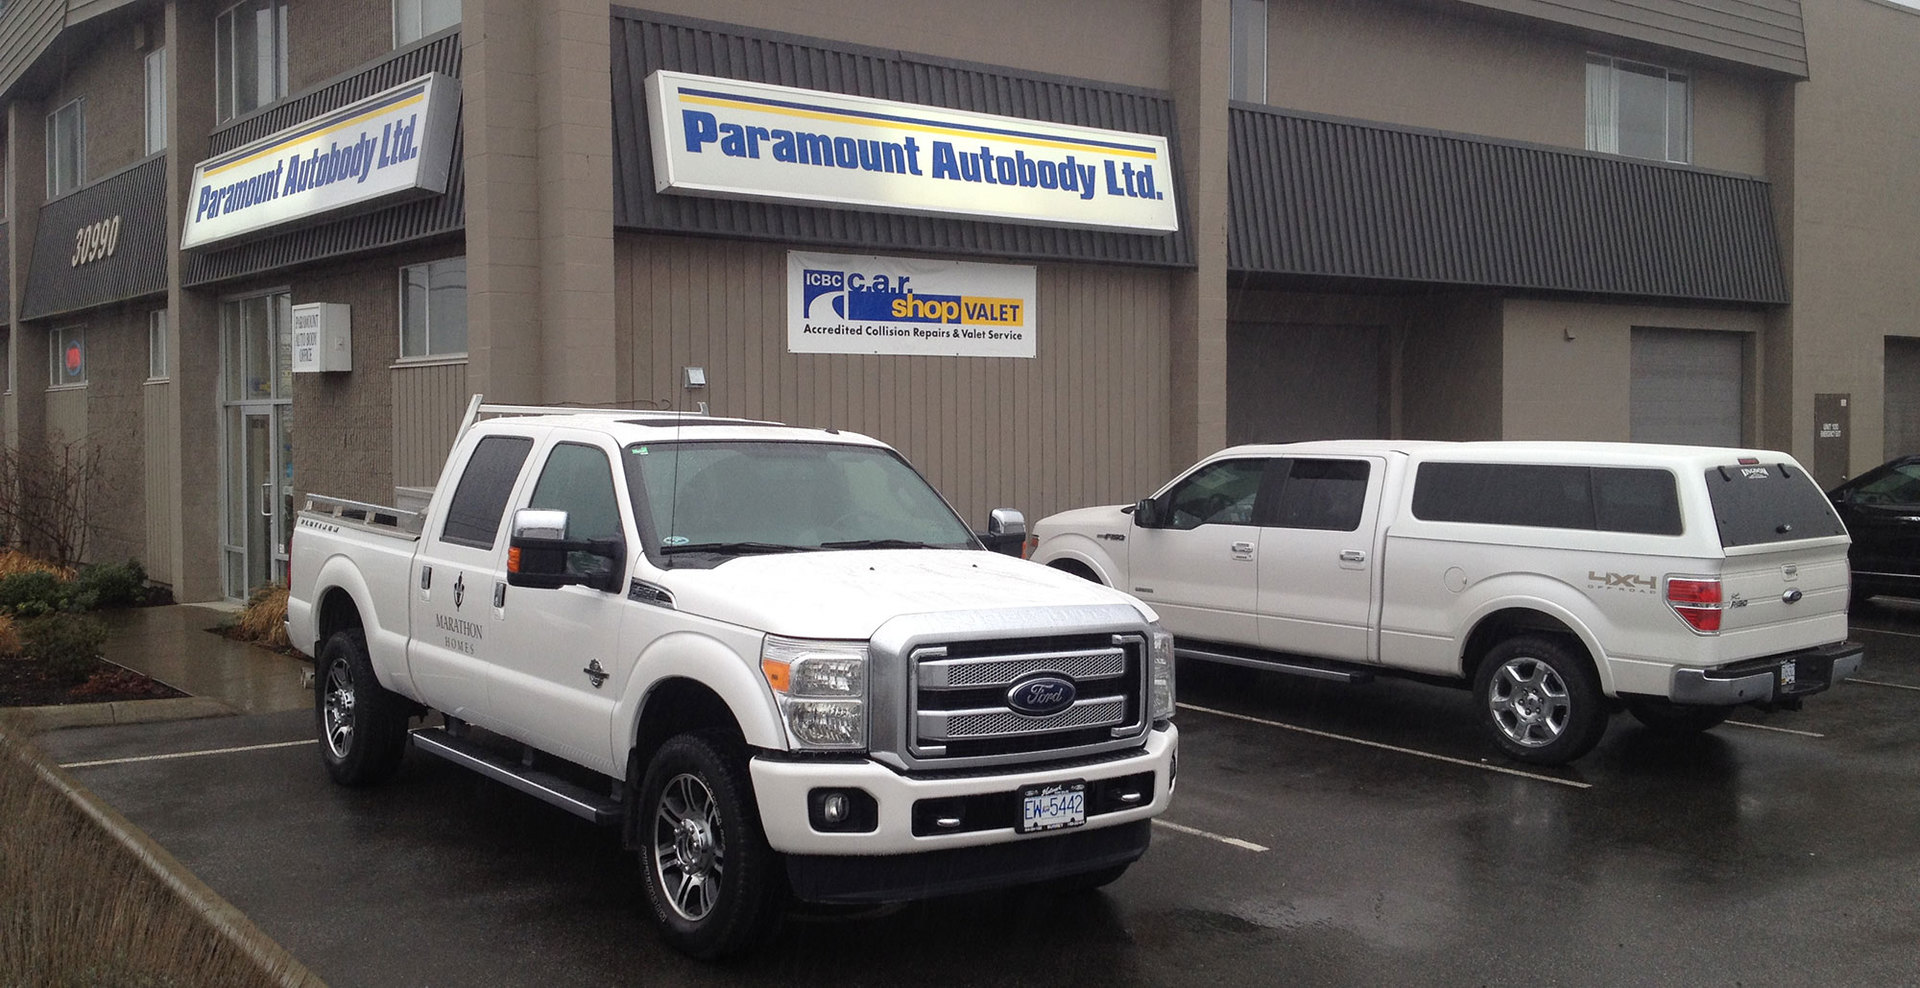 Paramount Autobody Ltd.